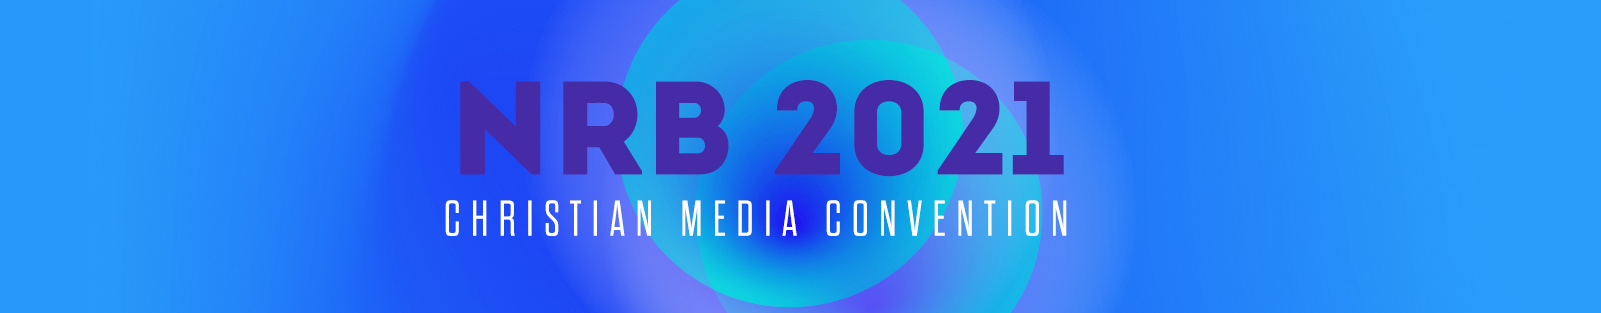 NRB 2021 - Christian Media Convention